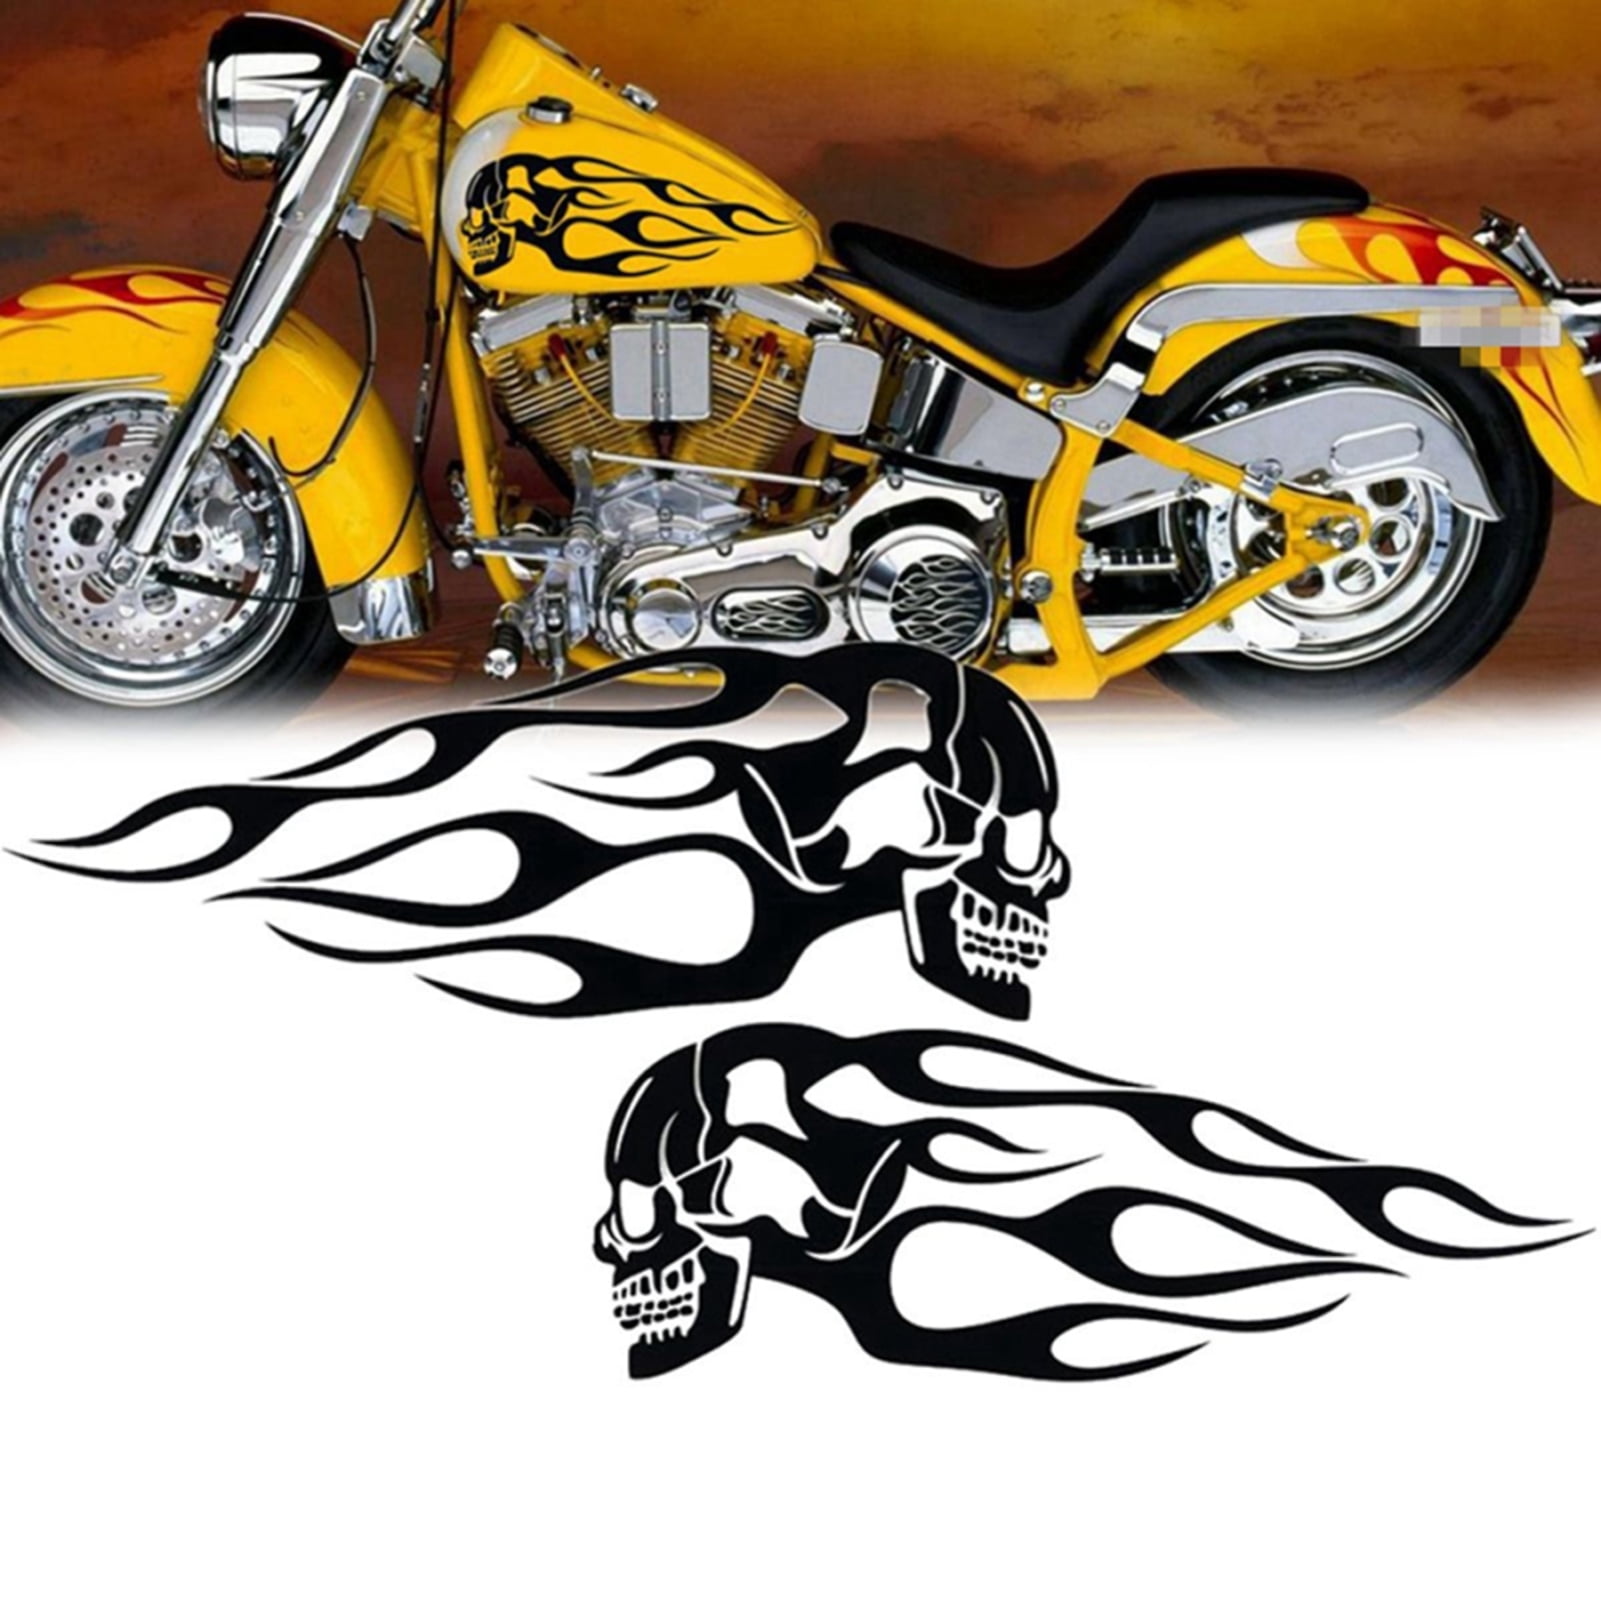 Tank 2 x Flame Decal Sticker Vinyl Graphics 50 Motorcycle MotorBike Bike